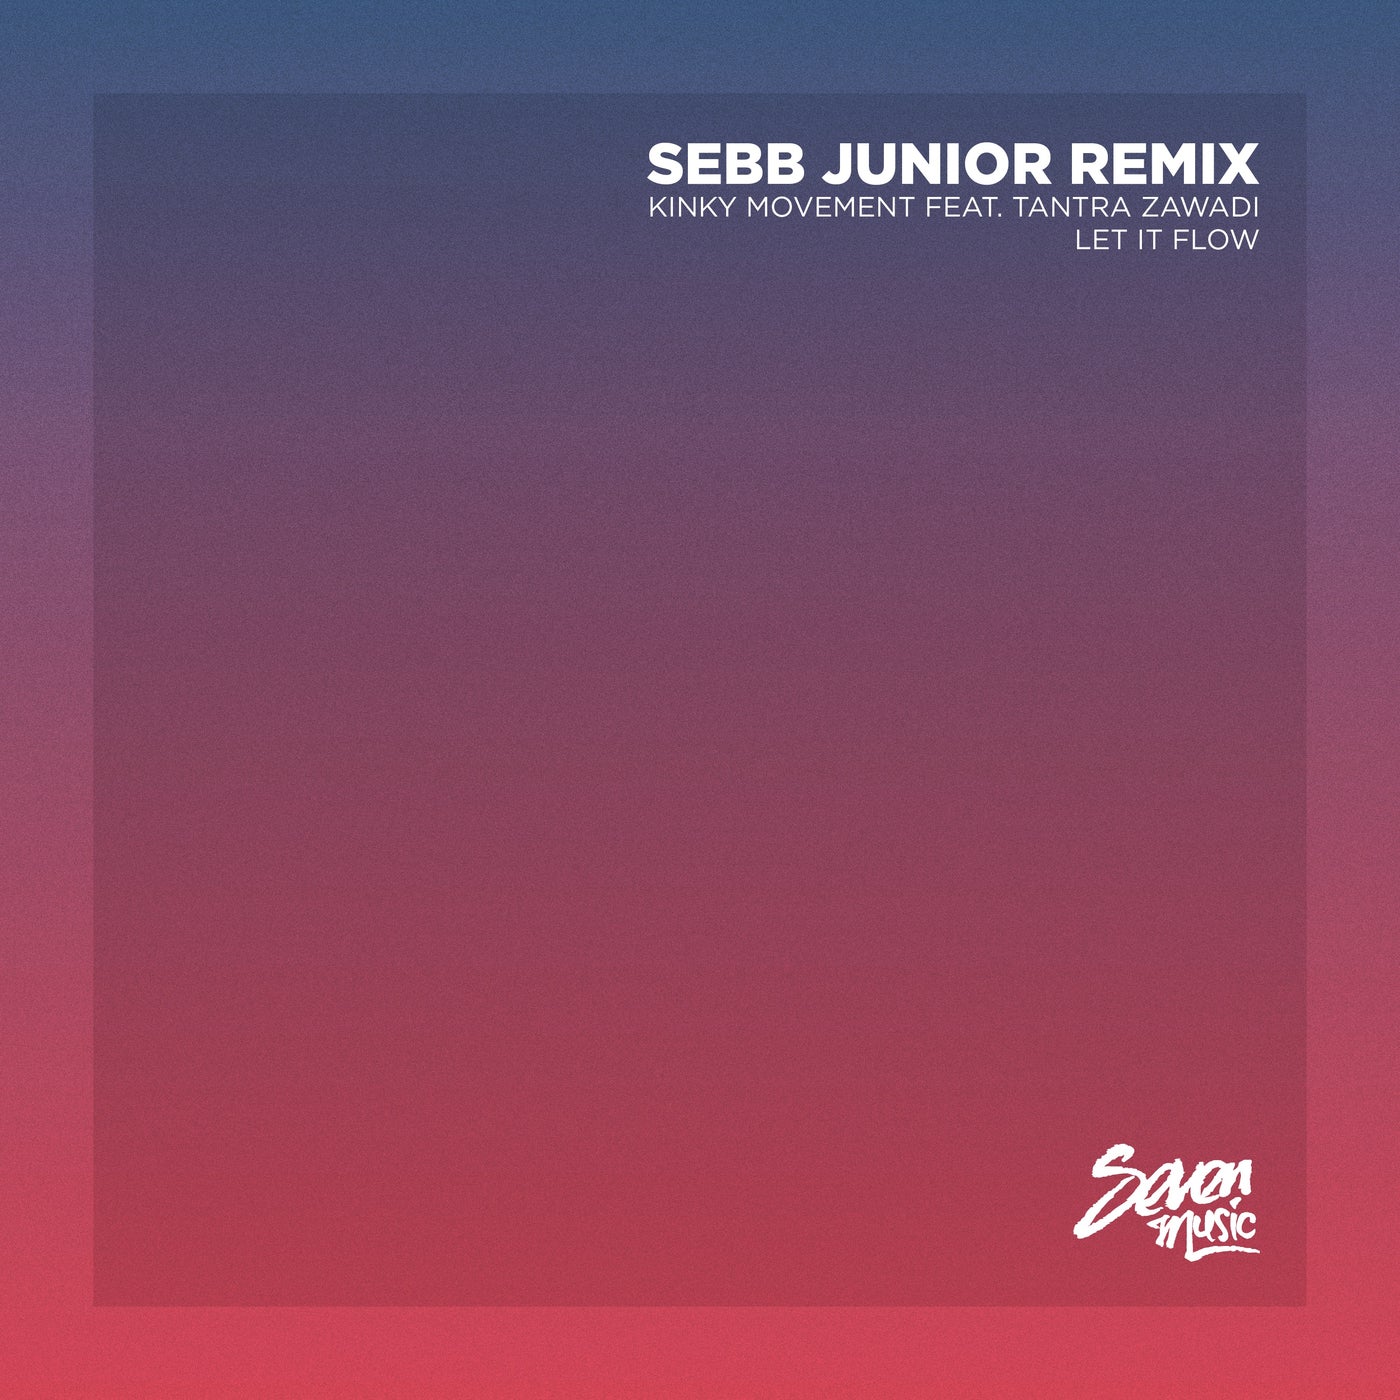 Kinky Movement, Sebb Junior – Let It Flow (Sebb Junior Remix) [7M072]